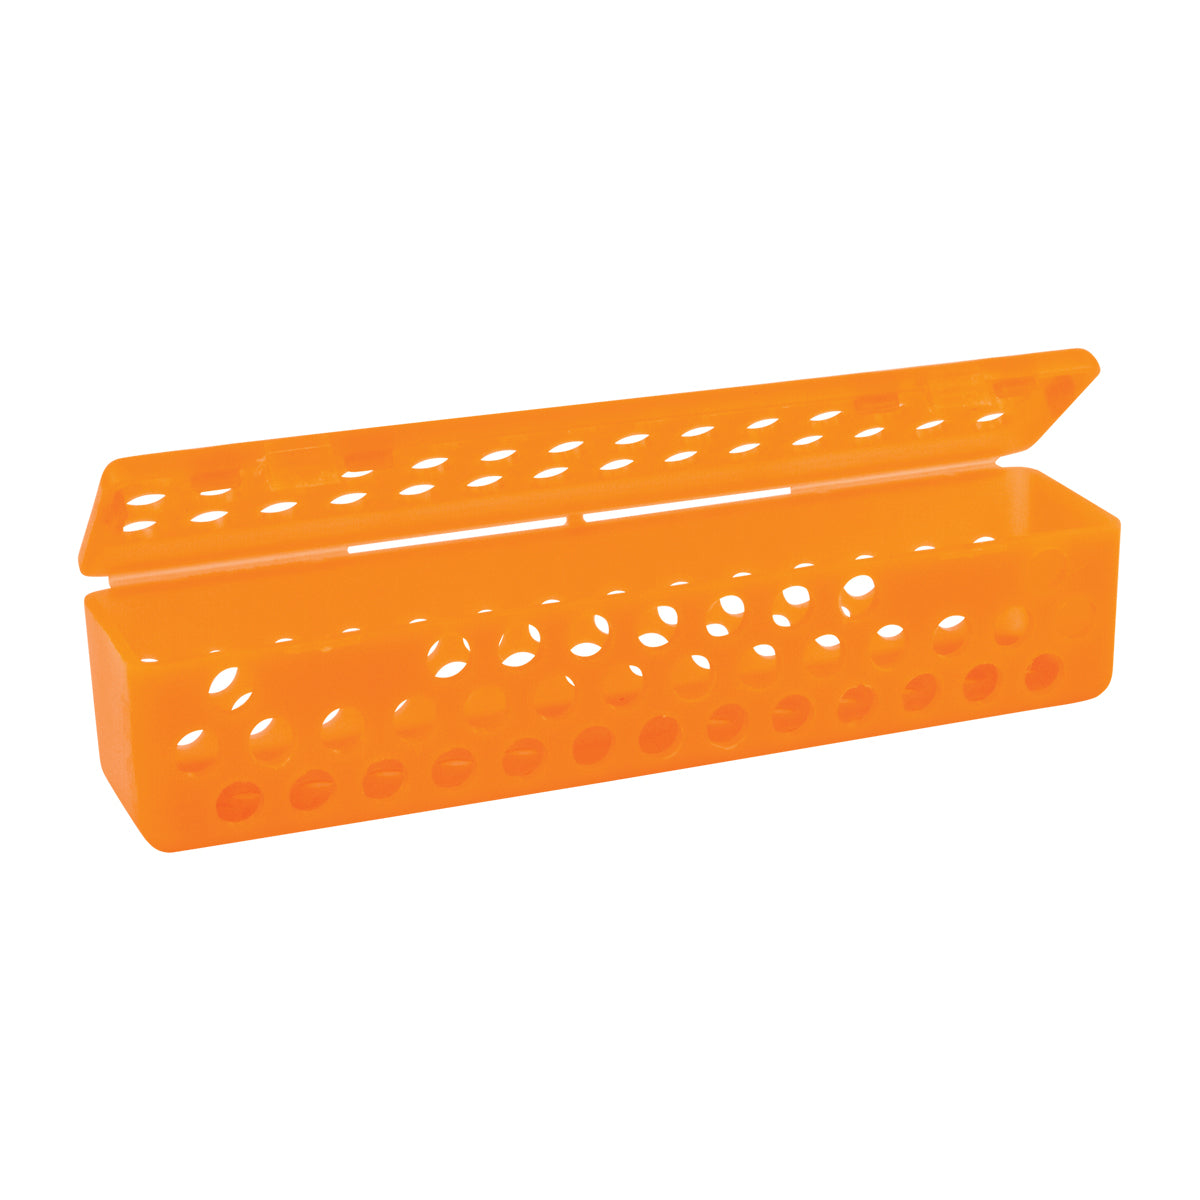 Plasdent Instrument Cleaning Box - Neon Orange